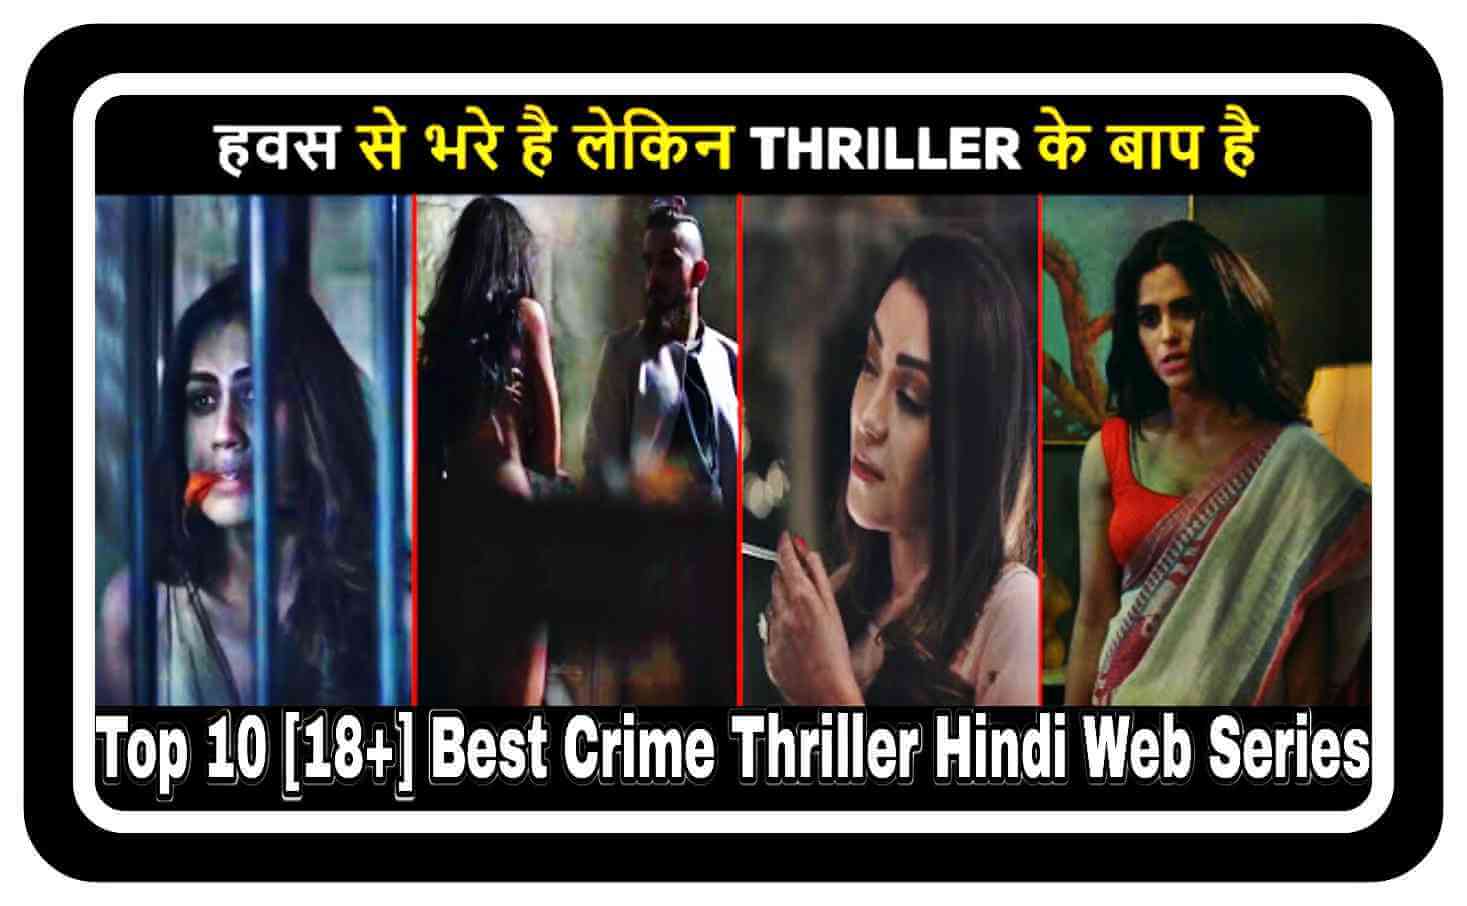 Top 10 Best Crime Thriller Hindi Web Series